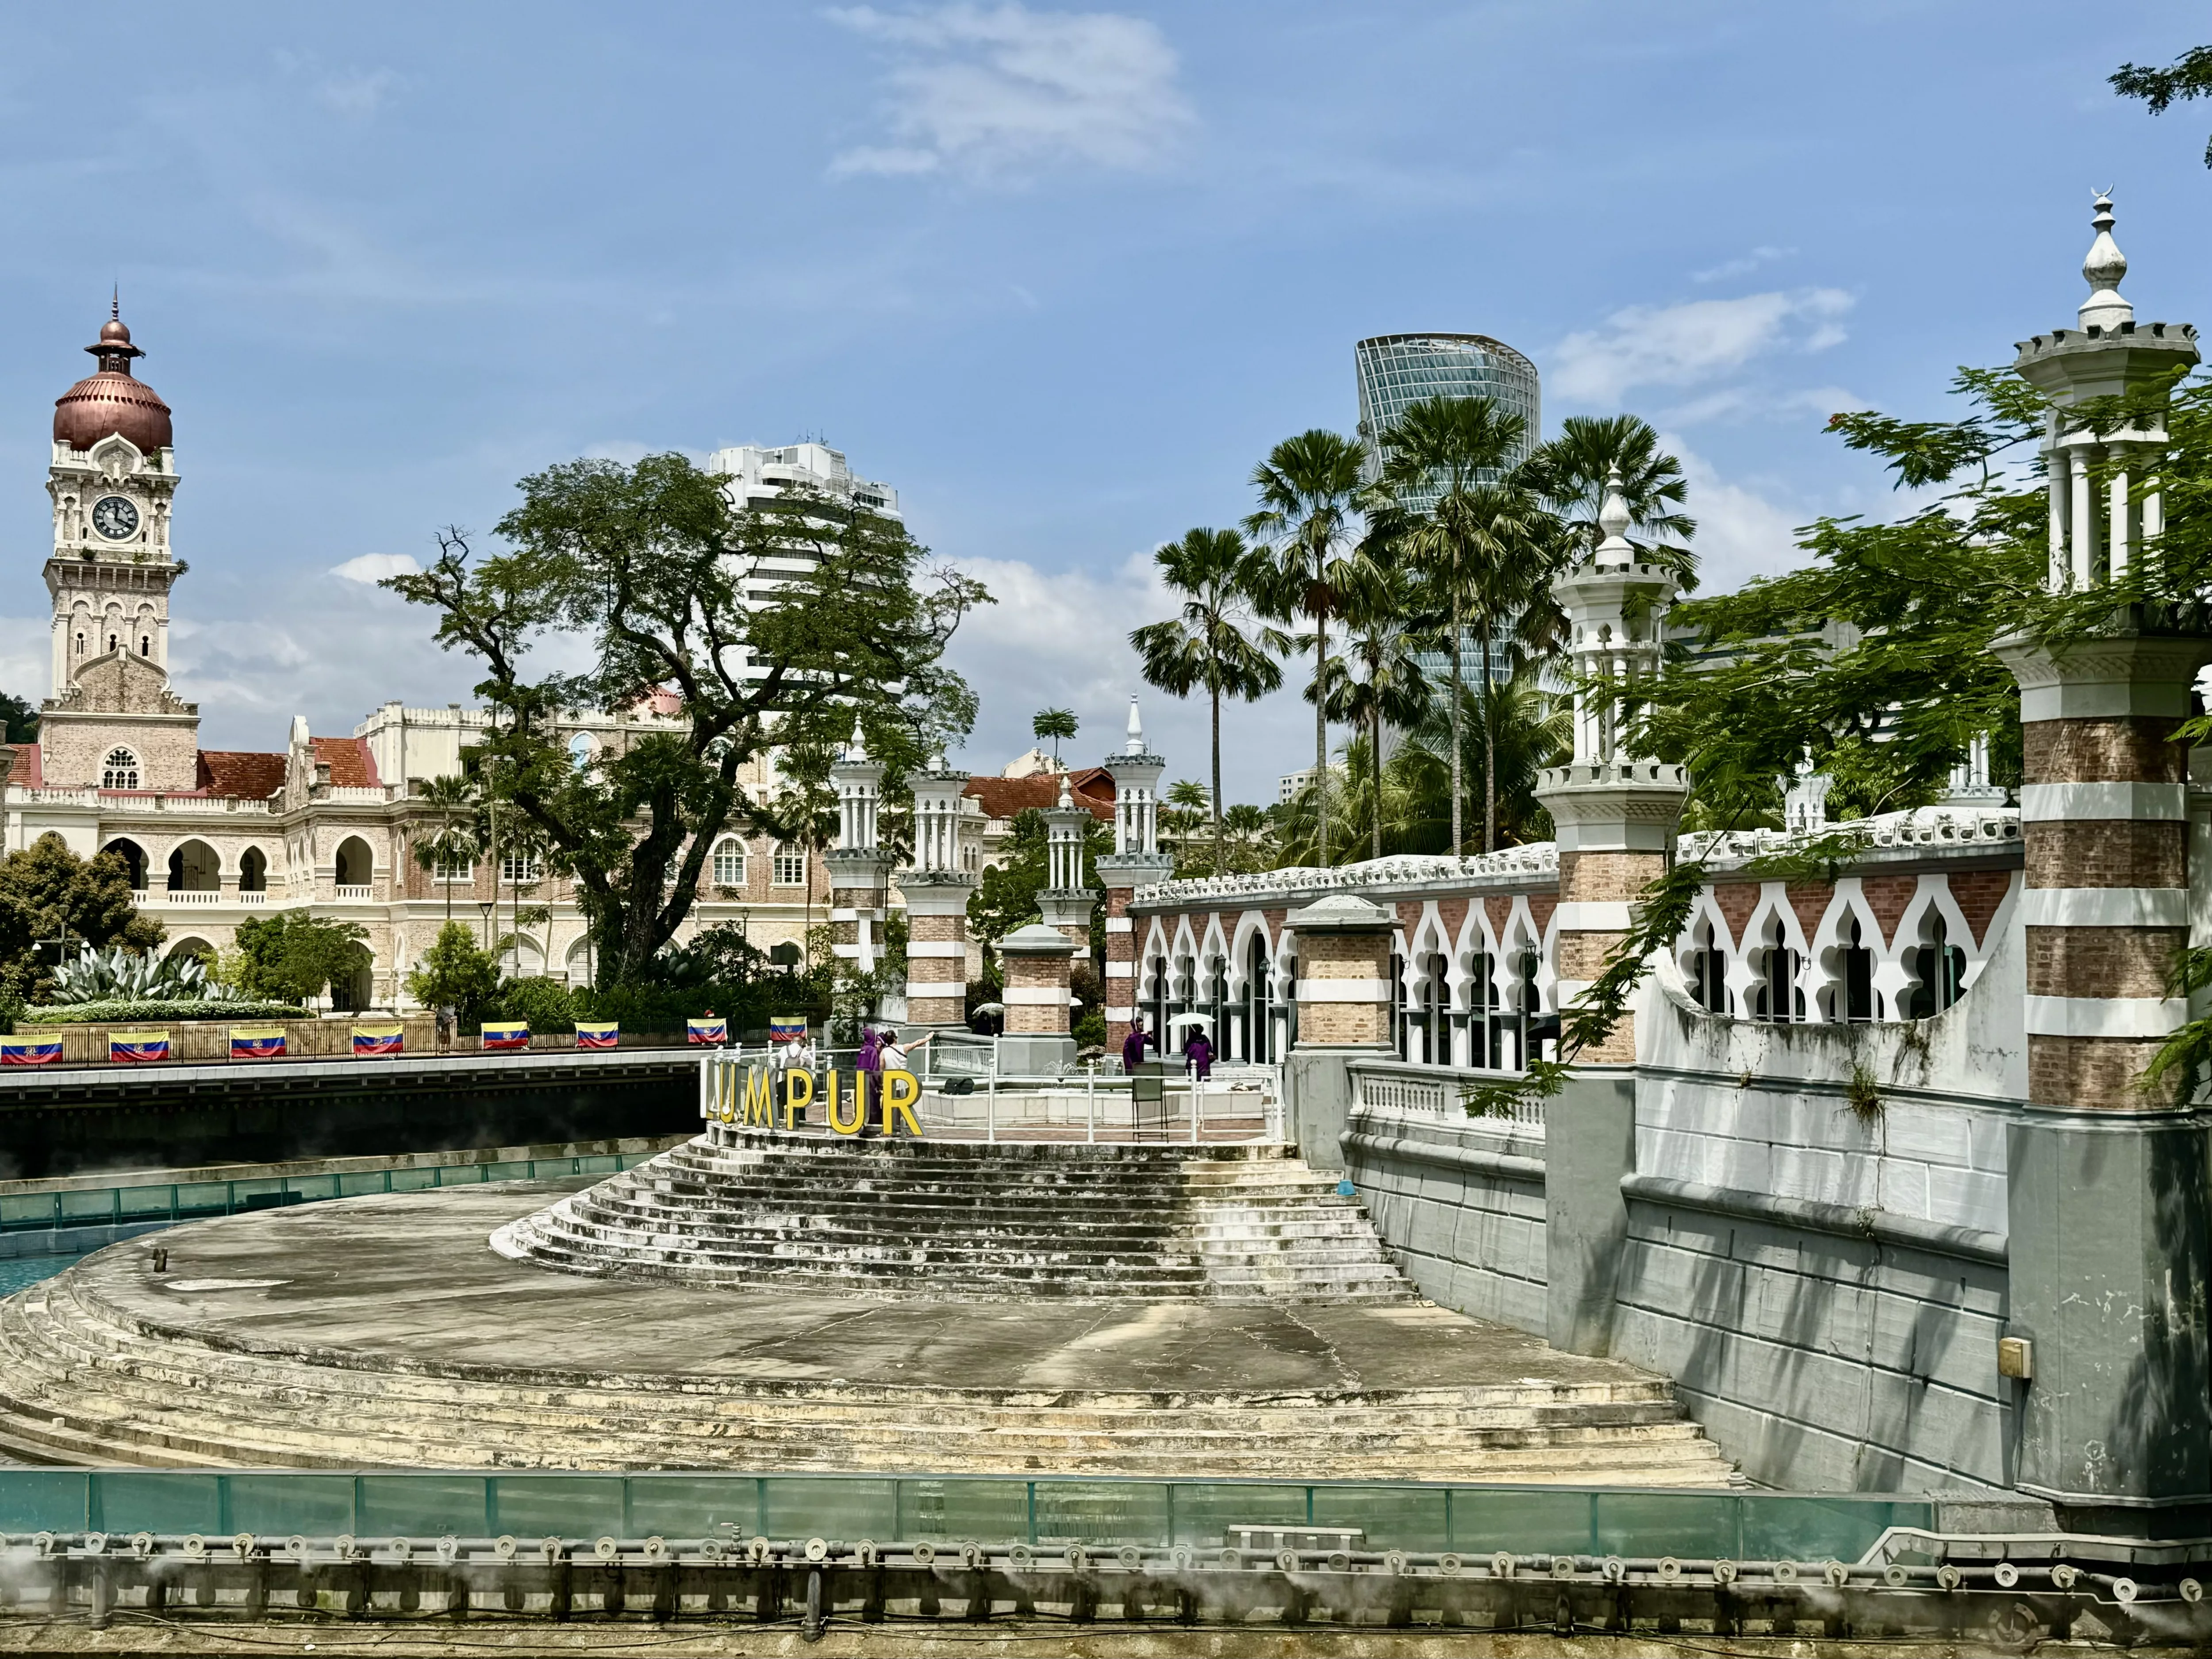 River of Life with the Masjid Jamek Sultan Abdul Samad, Kuala Lumpur, Malaysia